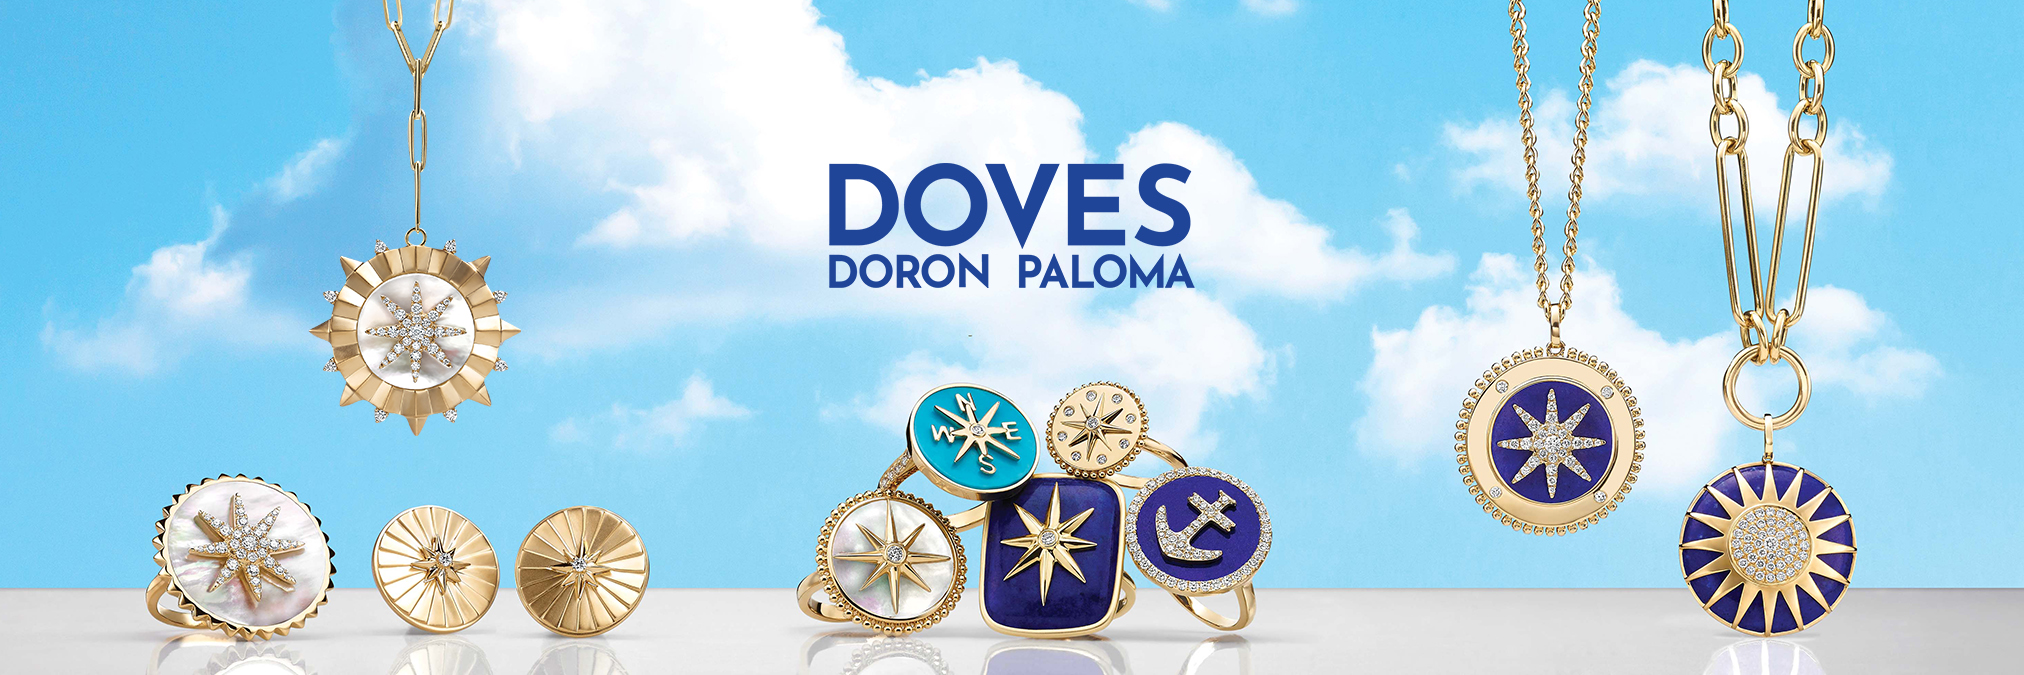 Morton & Rudolph Jewelers Doves by Doron Paloma